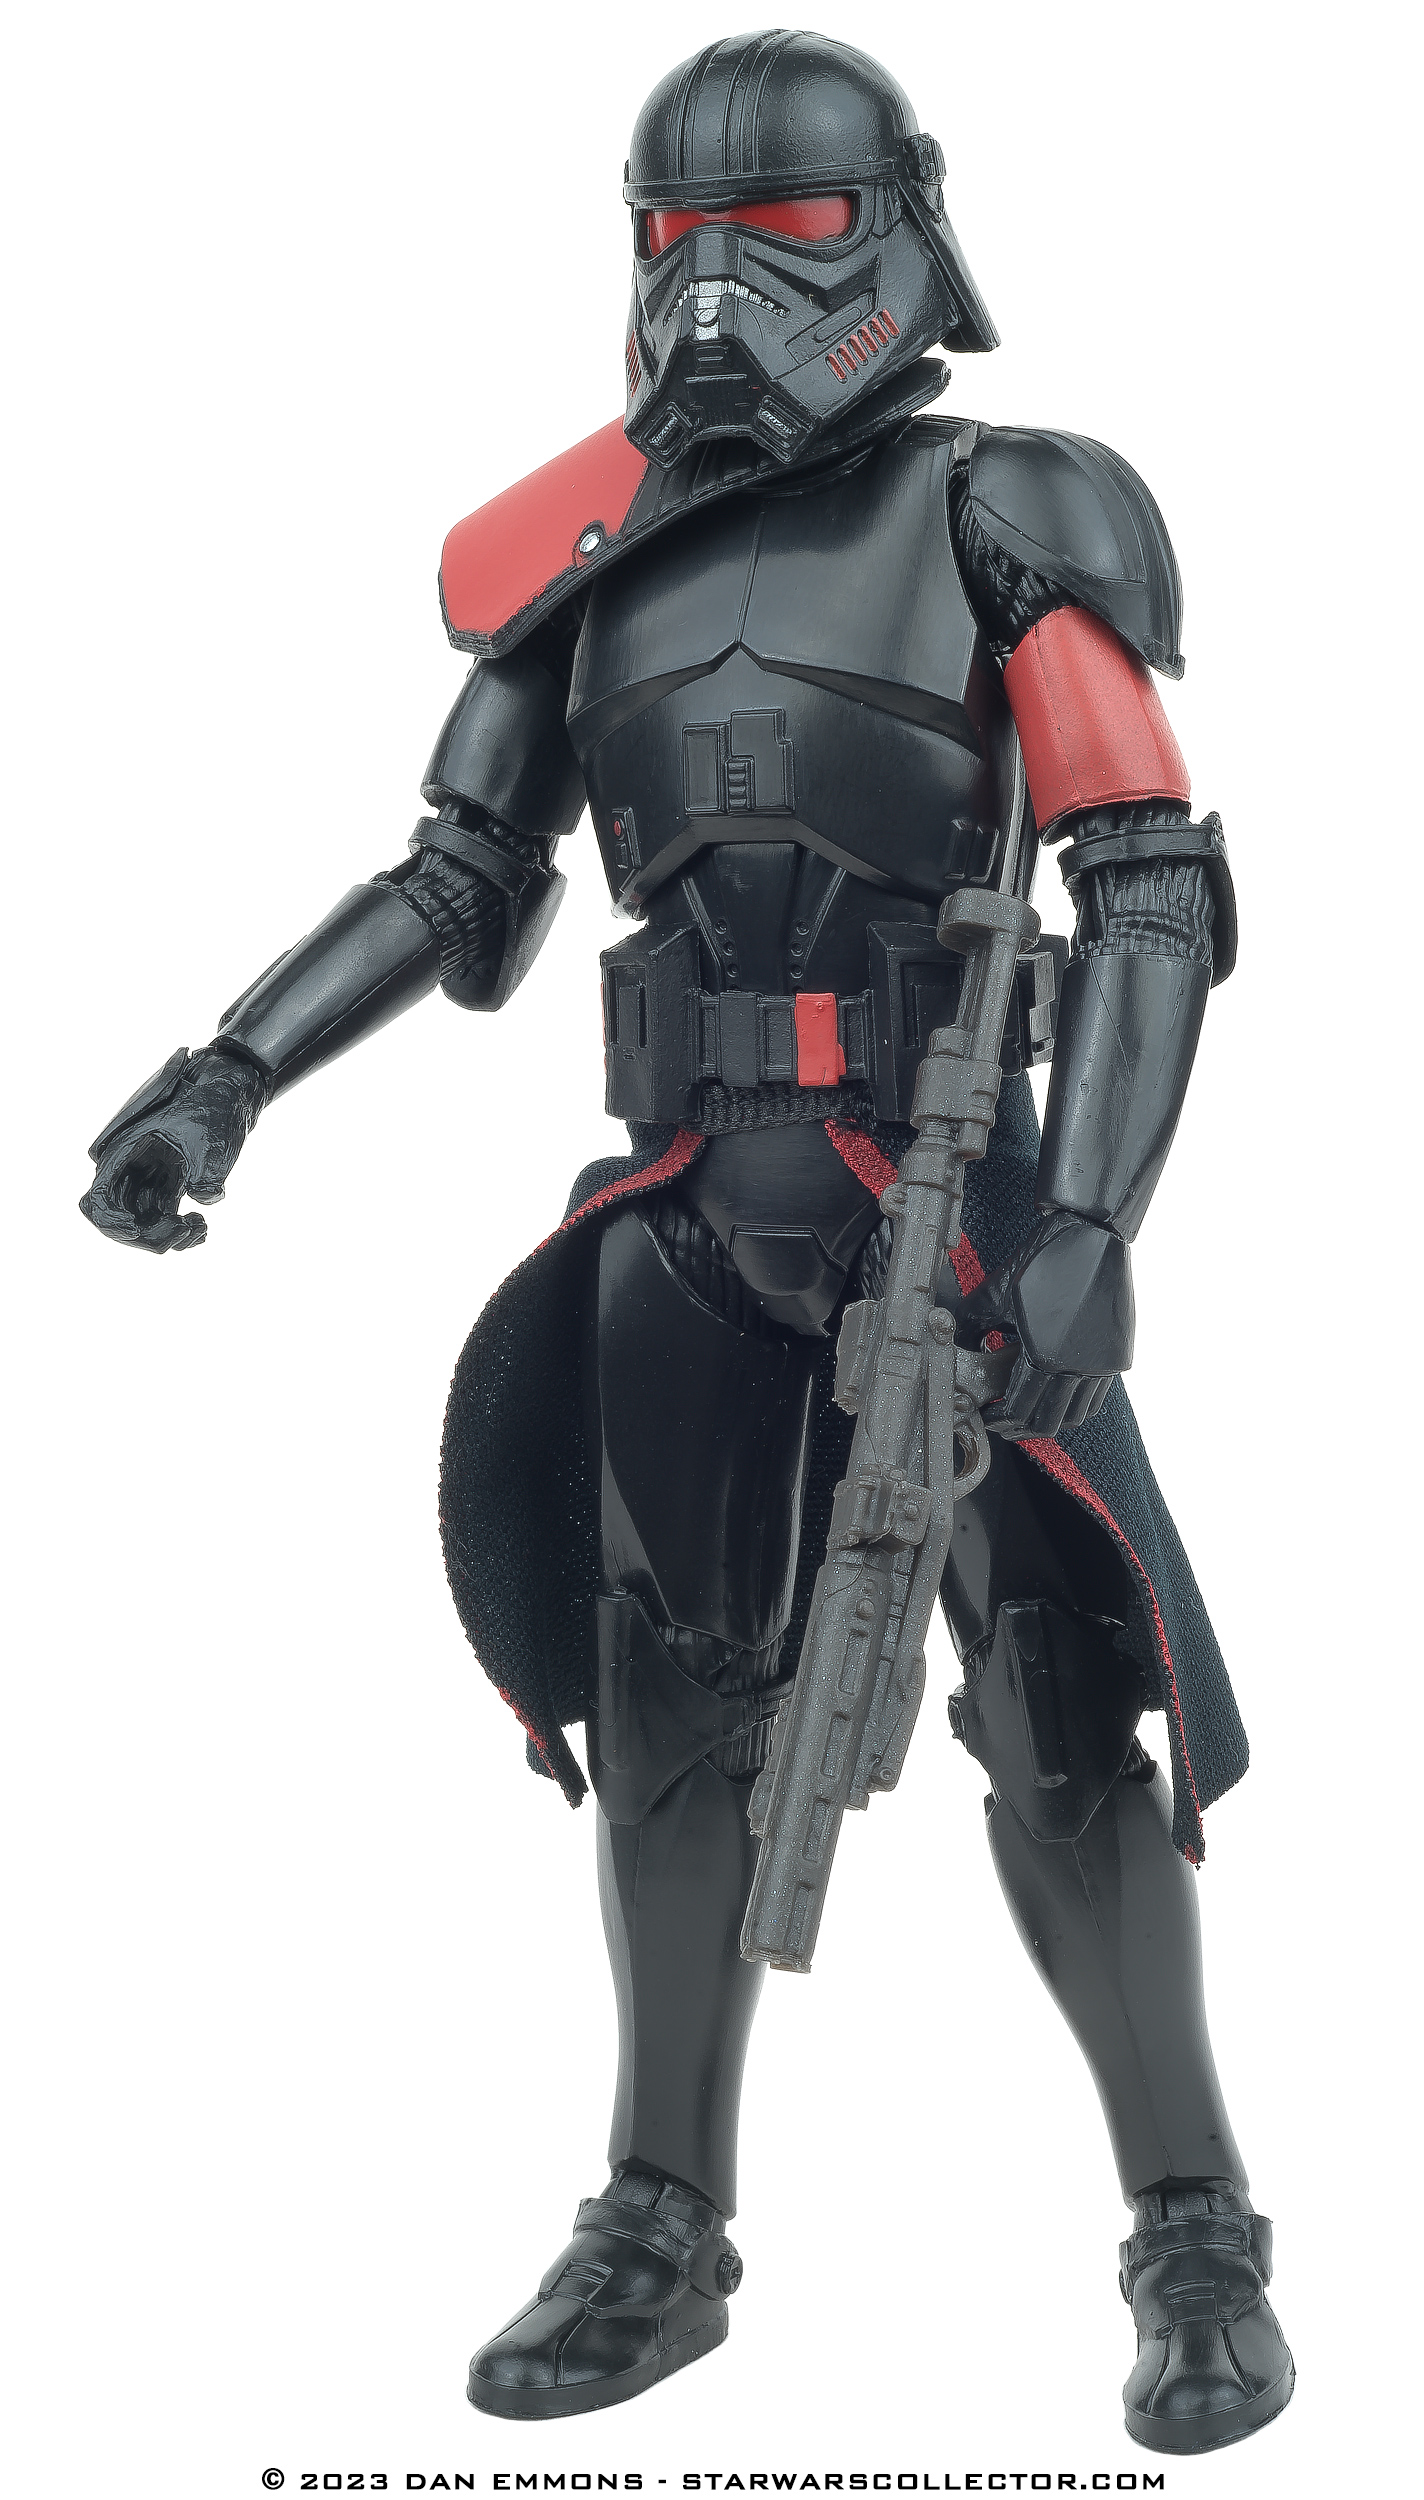 The Black Series 6-Inch Colorways Walmart Exclusive 07: Purge Trooper (Phase II Armor)